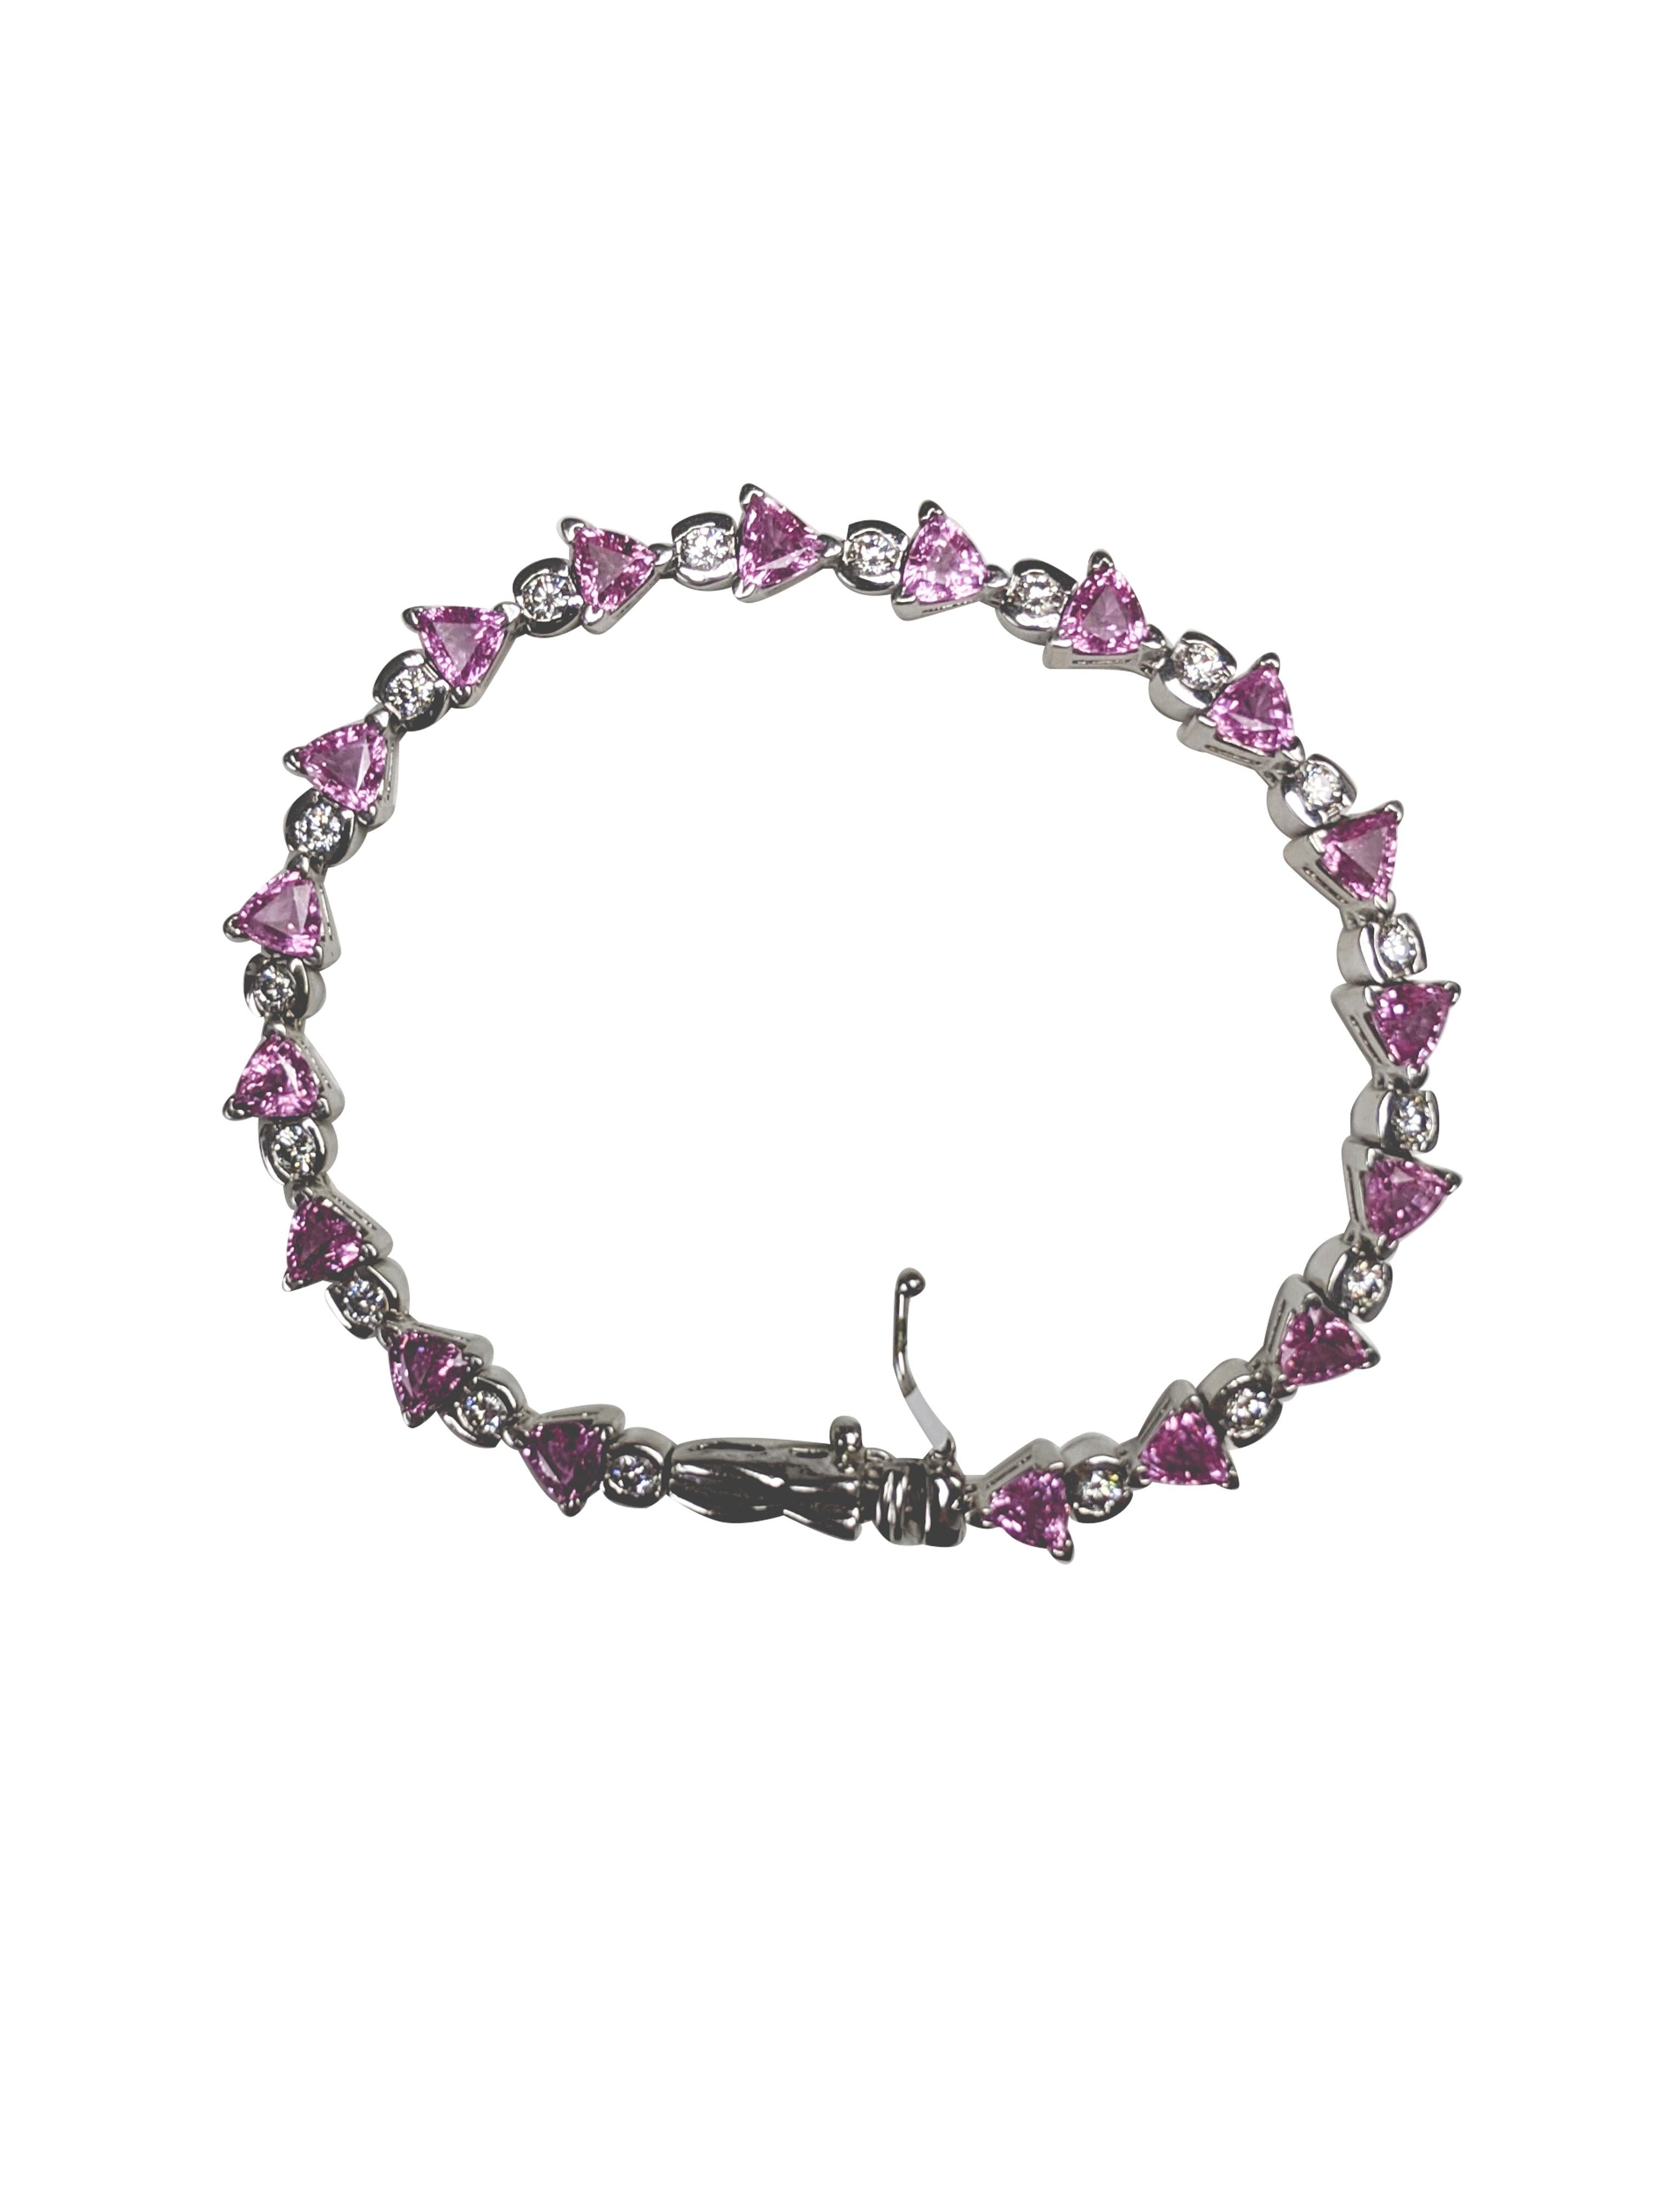 Pink Sapphire Bracelet 14k white Tennis Bracelet, 7 inches long, 18 pink sapphire, 18 diamonds.

1.10 carrot diamond

7.30 carrot Sapphire